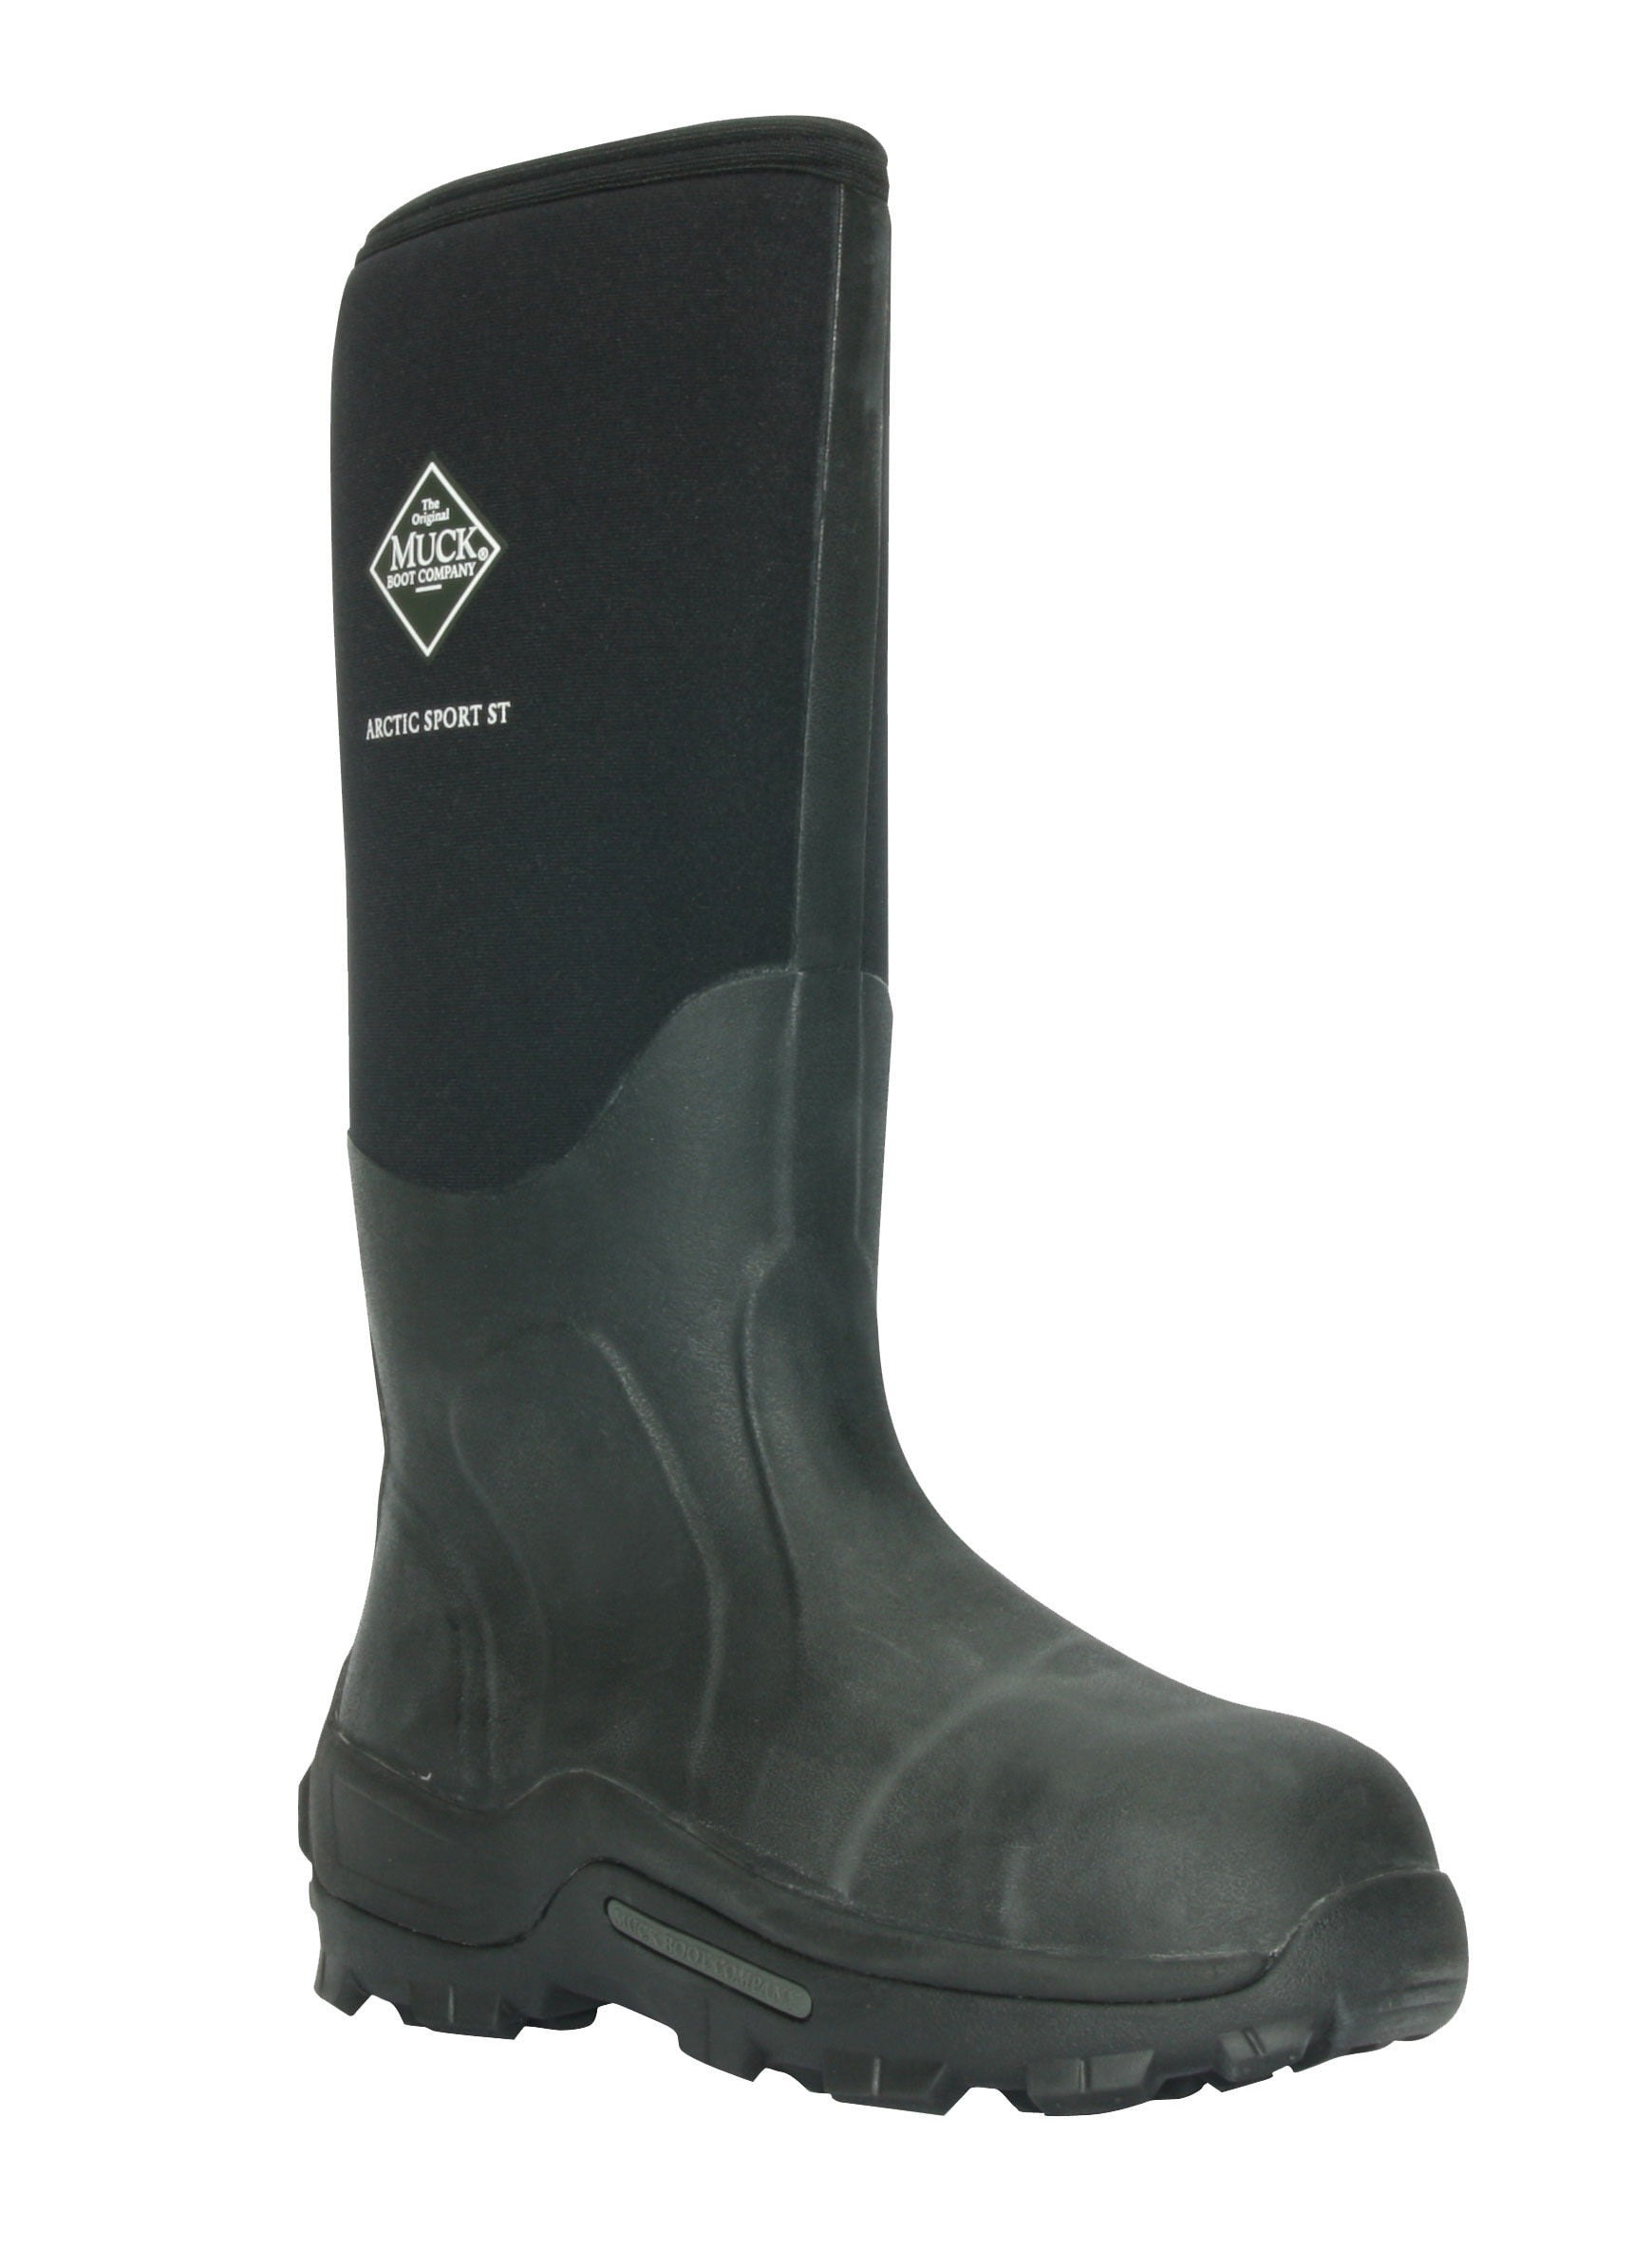 Muck Boot Company - Muck ASP-STL Men's Arctic Sport Tall Steel Toe ...